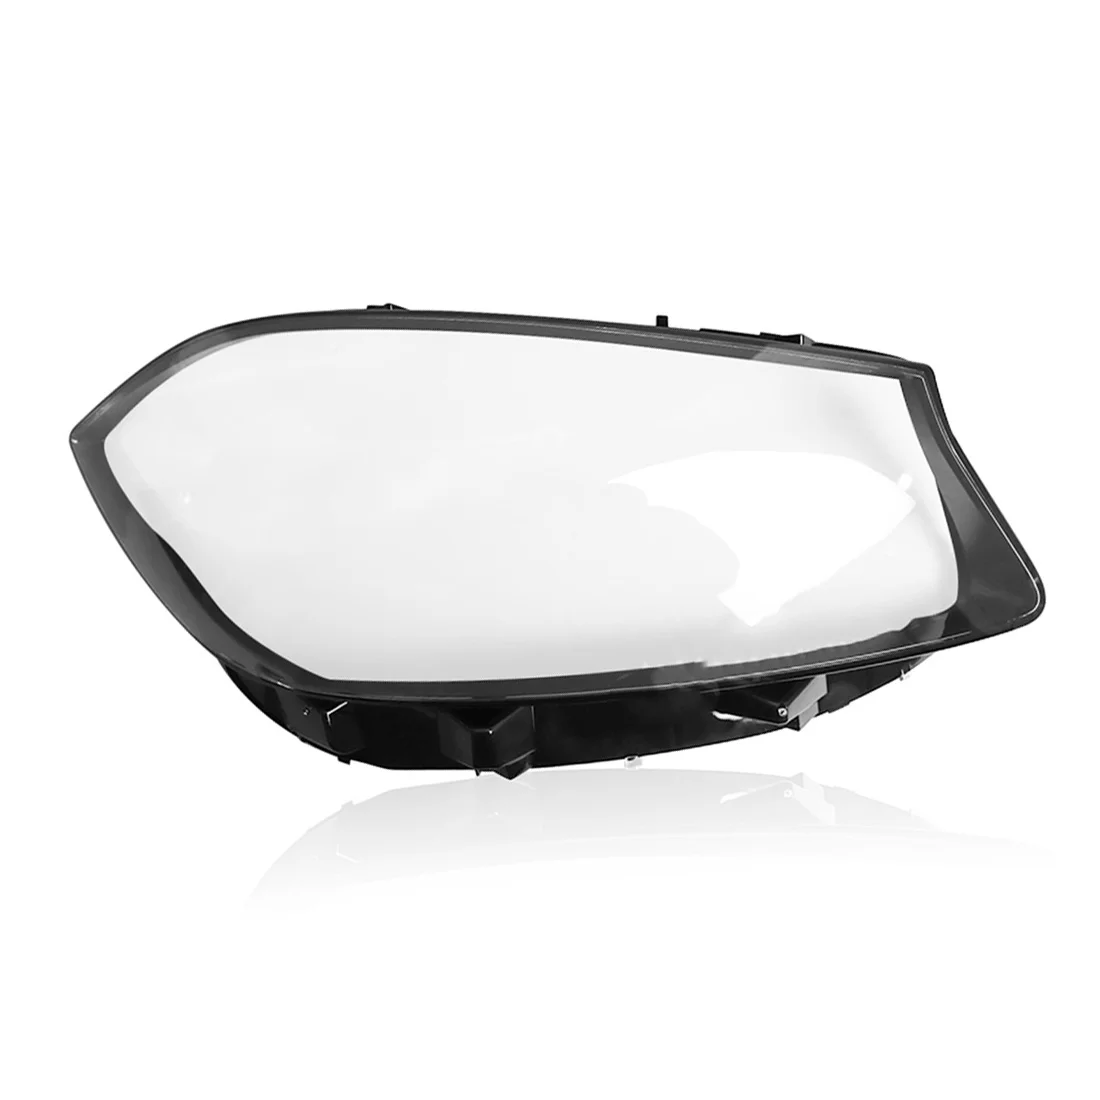 

Правая боковая фара крышка объектива прозрачный абажур стеклянный корпус для Benz W176 A-Class A180 A200 A260 A45 AMG 2017-2018